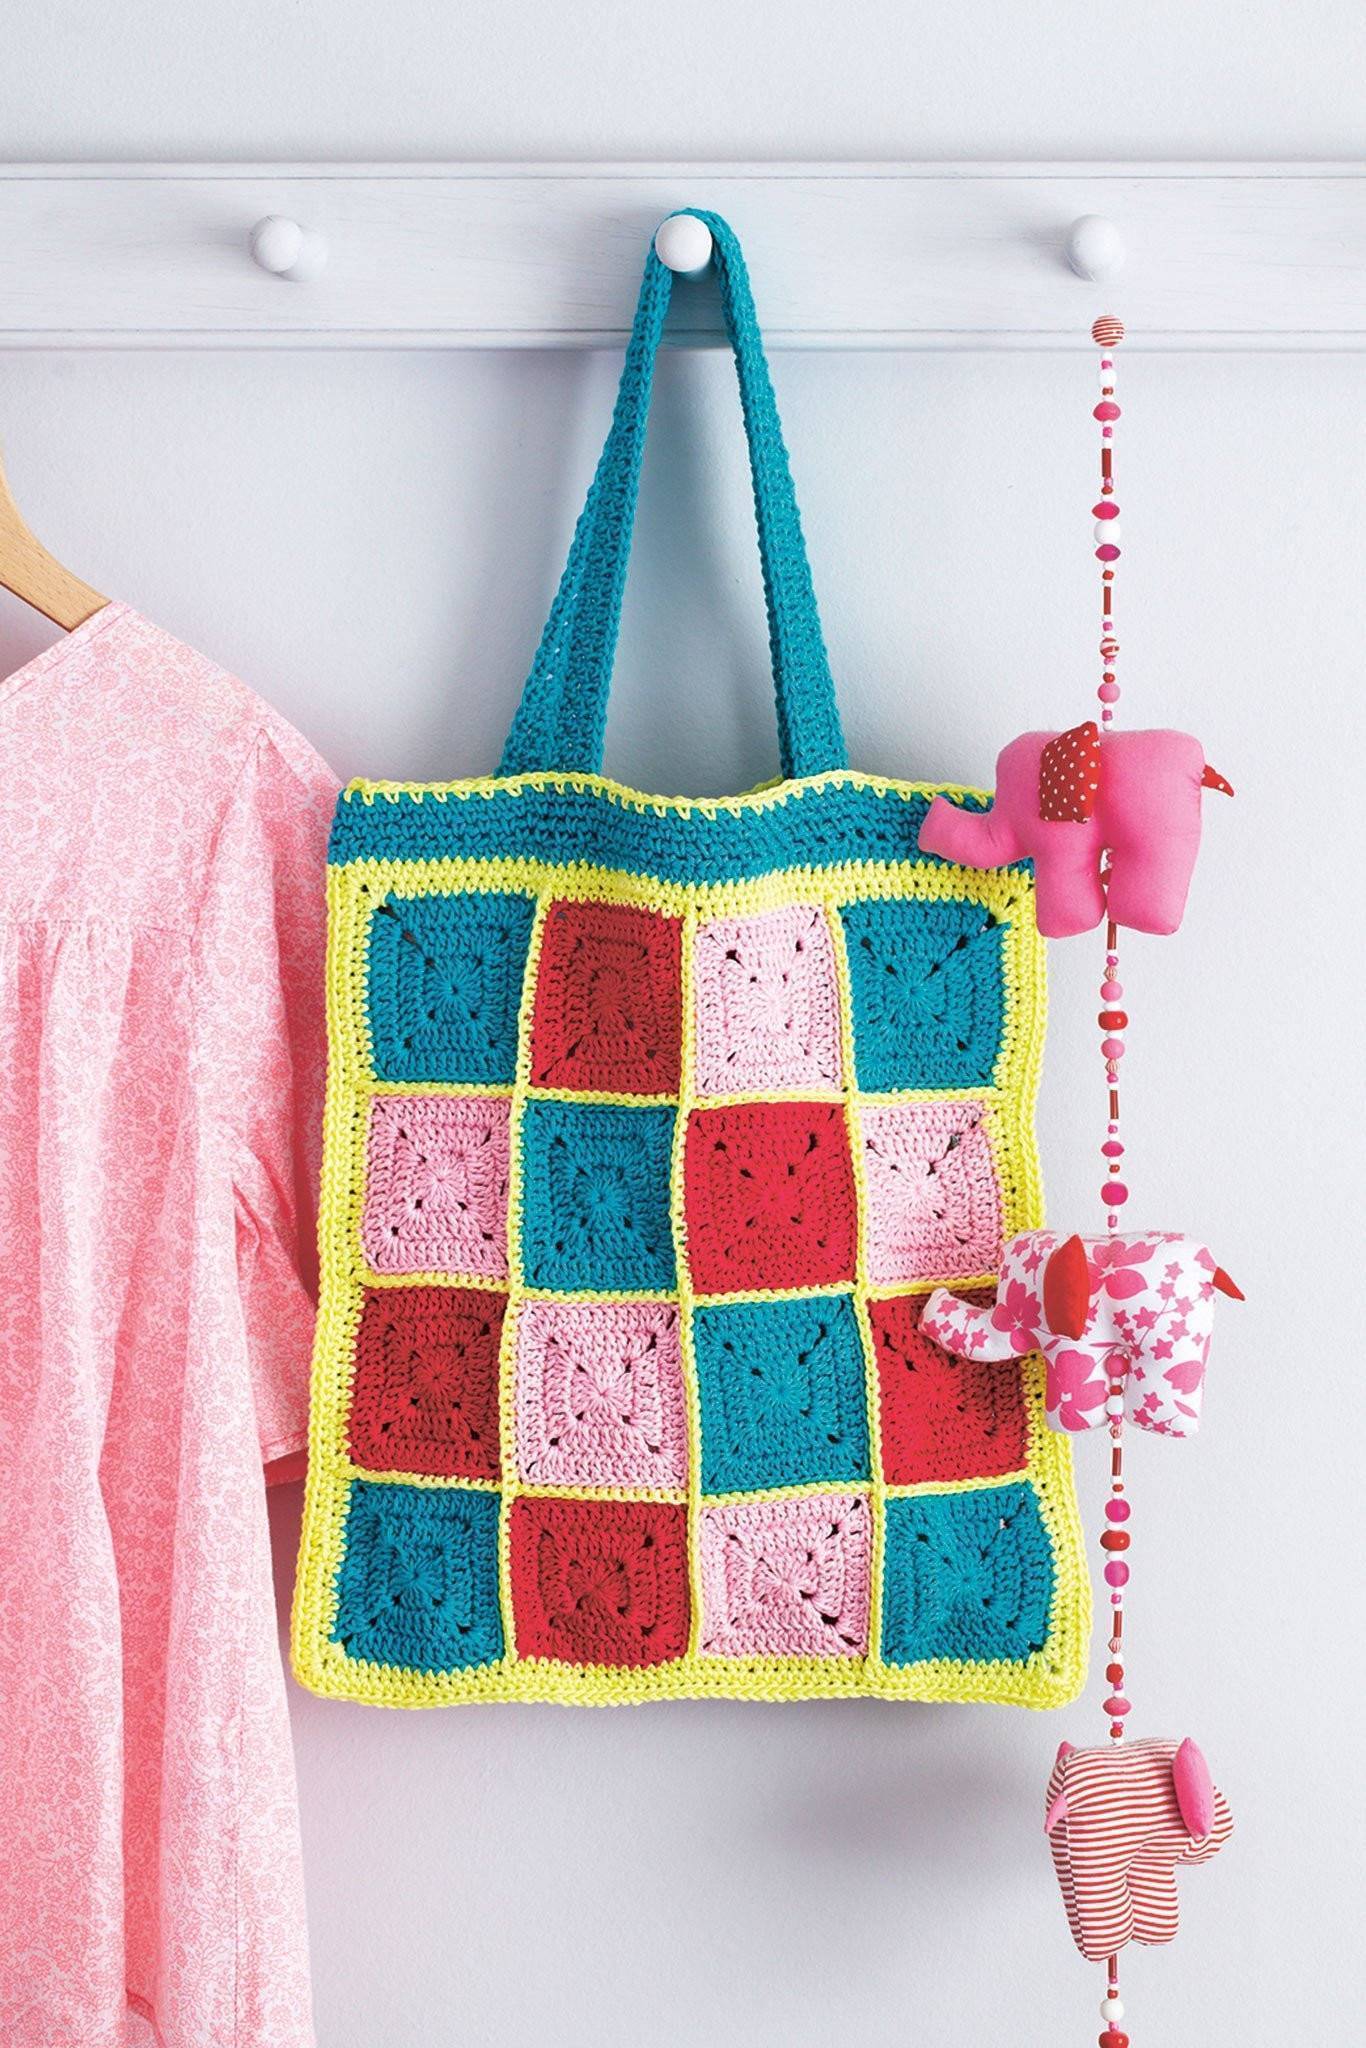 Granny Square Bag Crochet Pattern | The Knitting Network